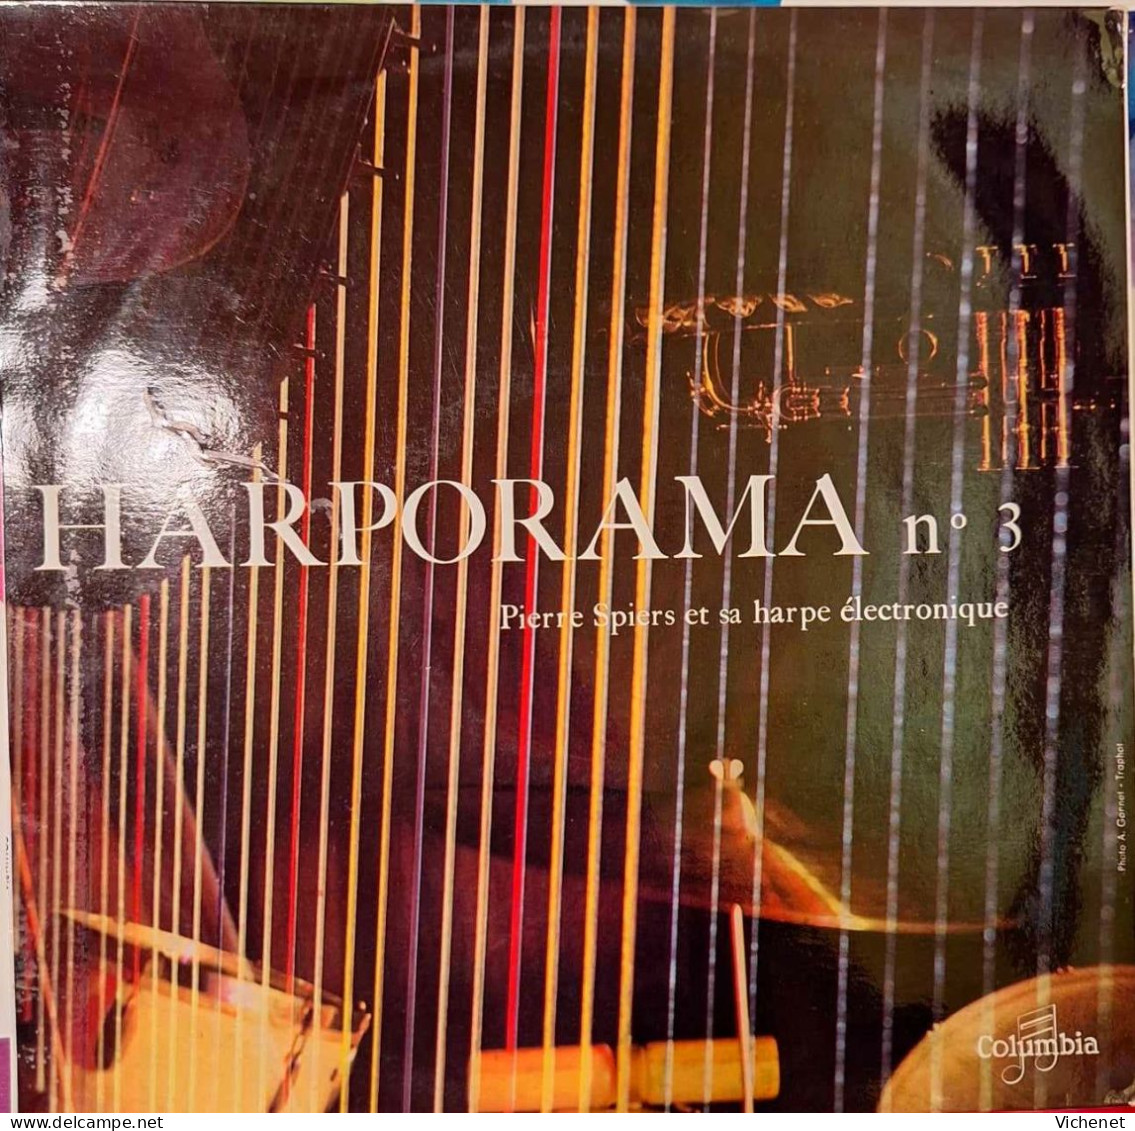 Pierre Spiers Et Sa Harpe Electronique - Harporama N° 3 - 25 Cm - Formati Speciali